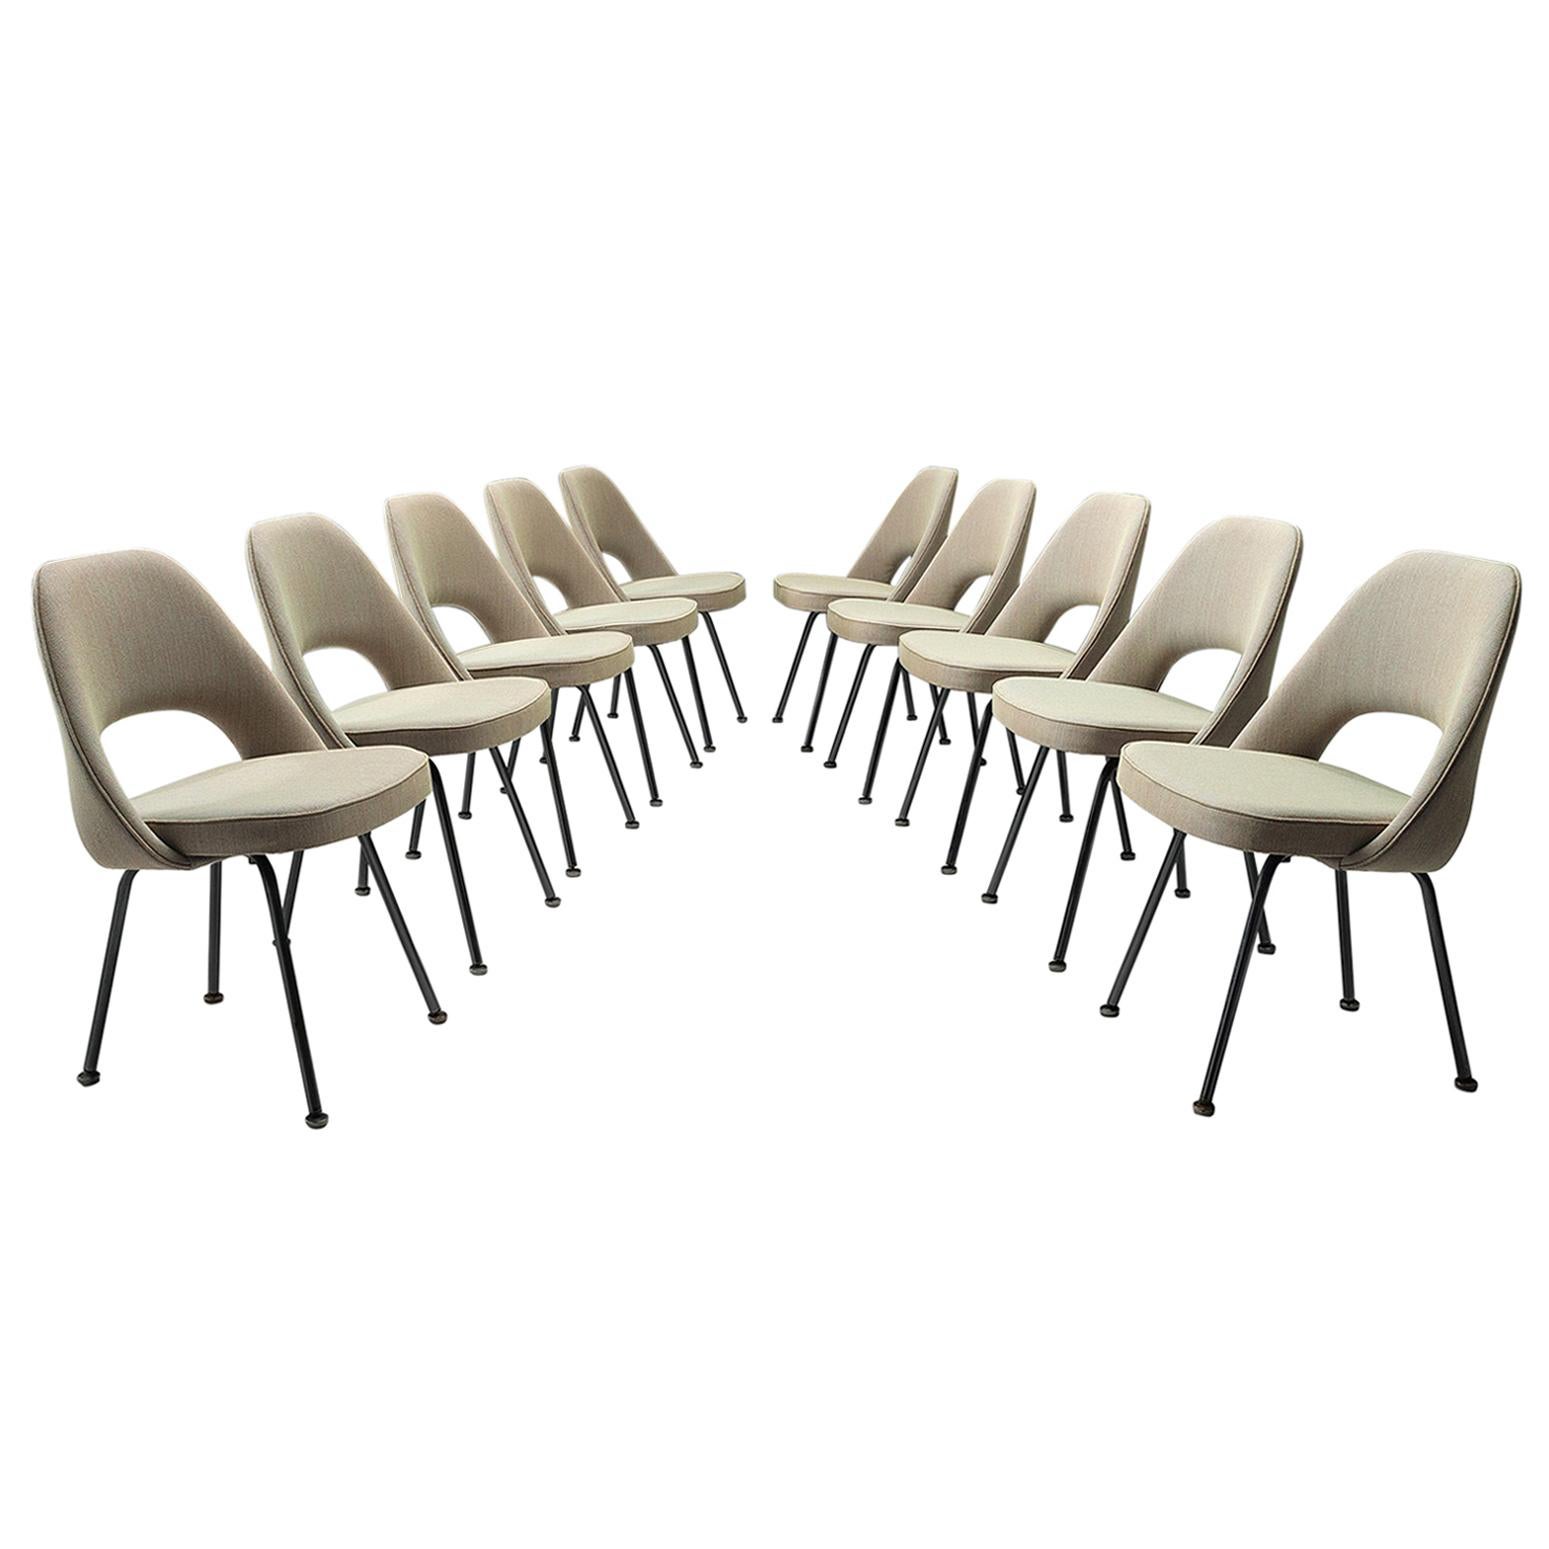 Eero Saarinen for Knoll "Model 72" Chairs